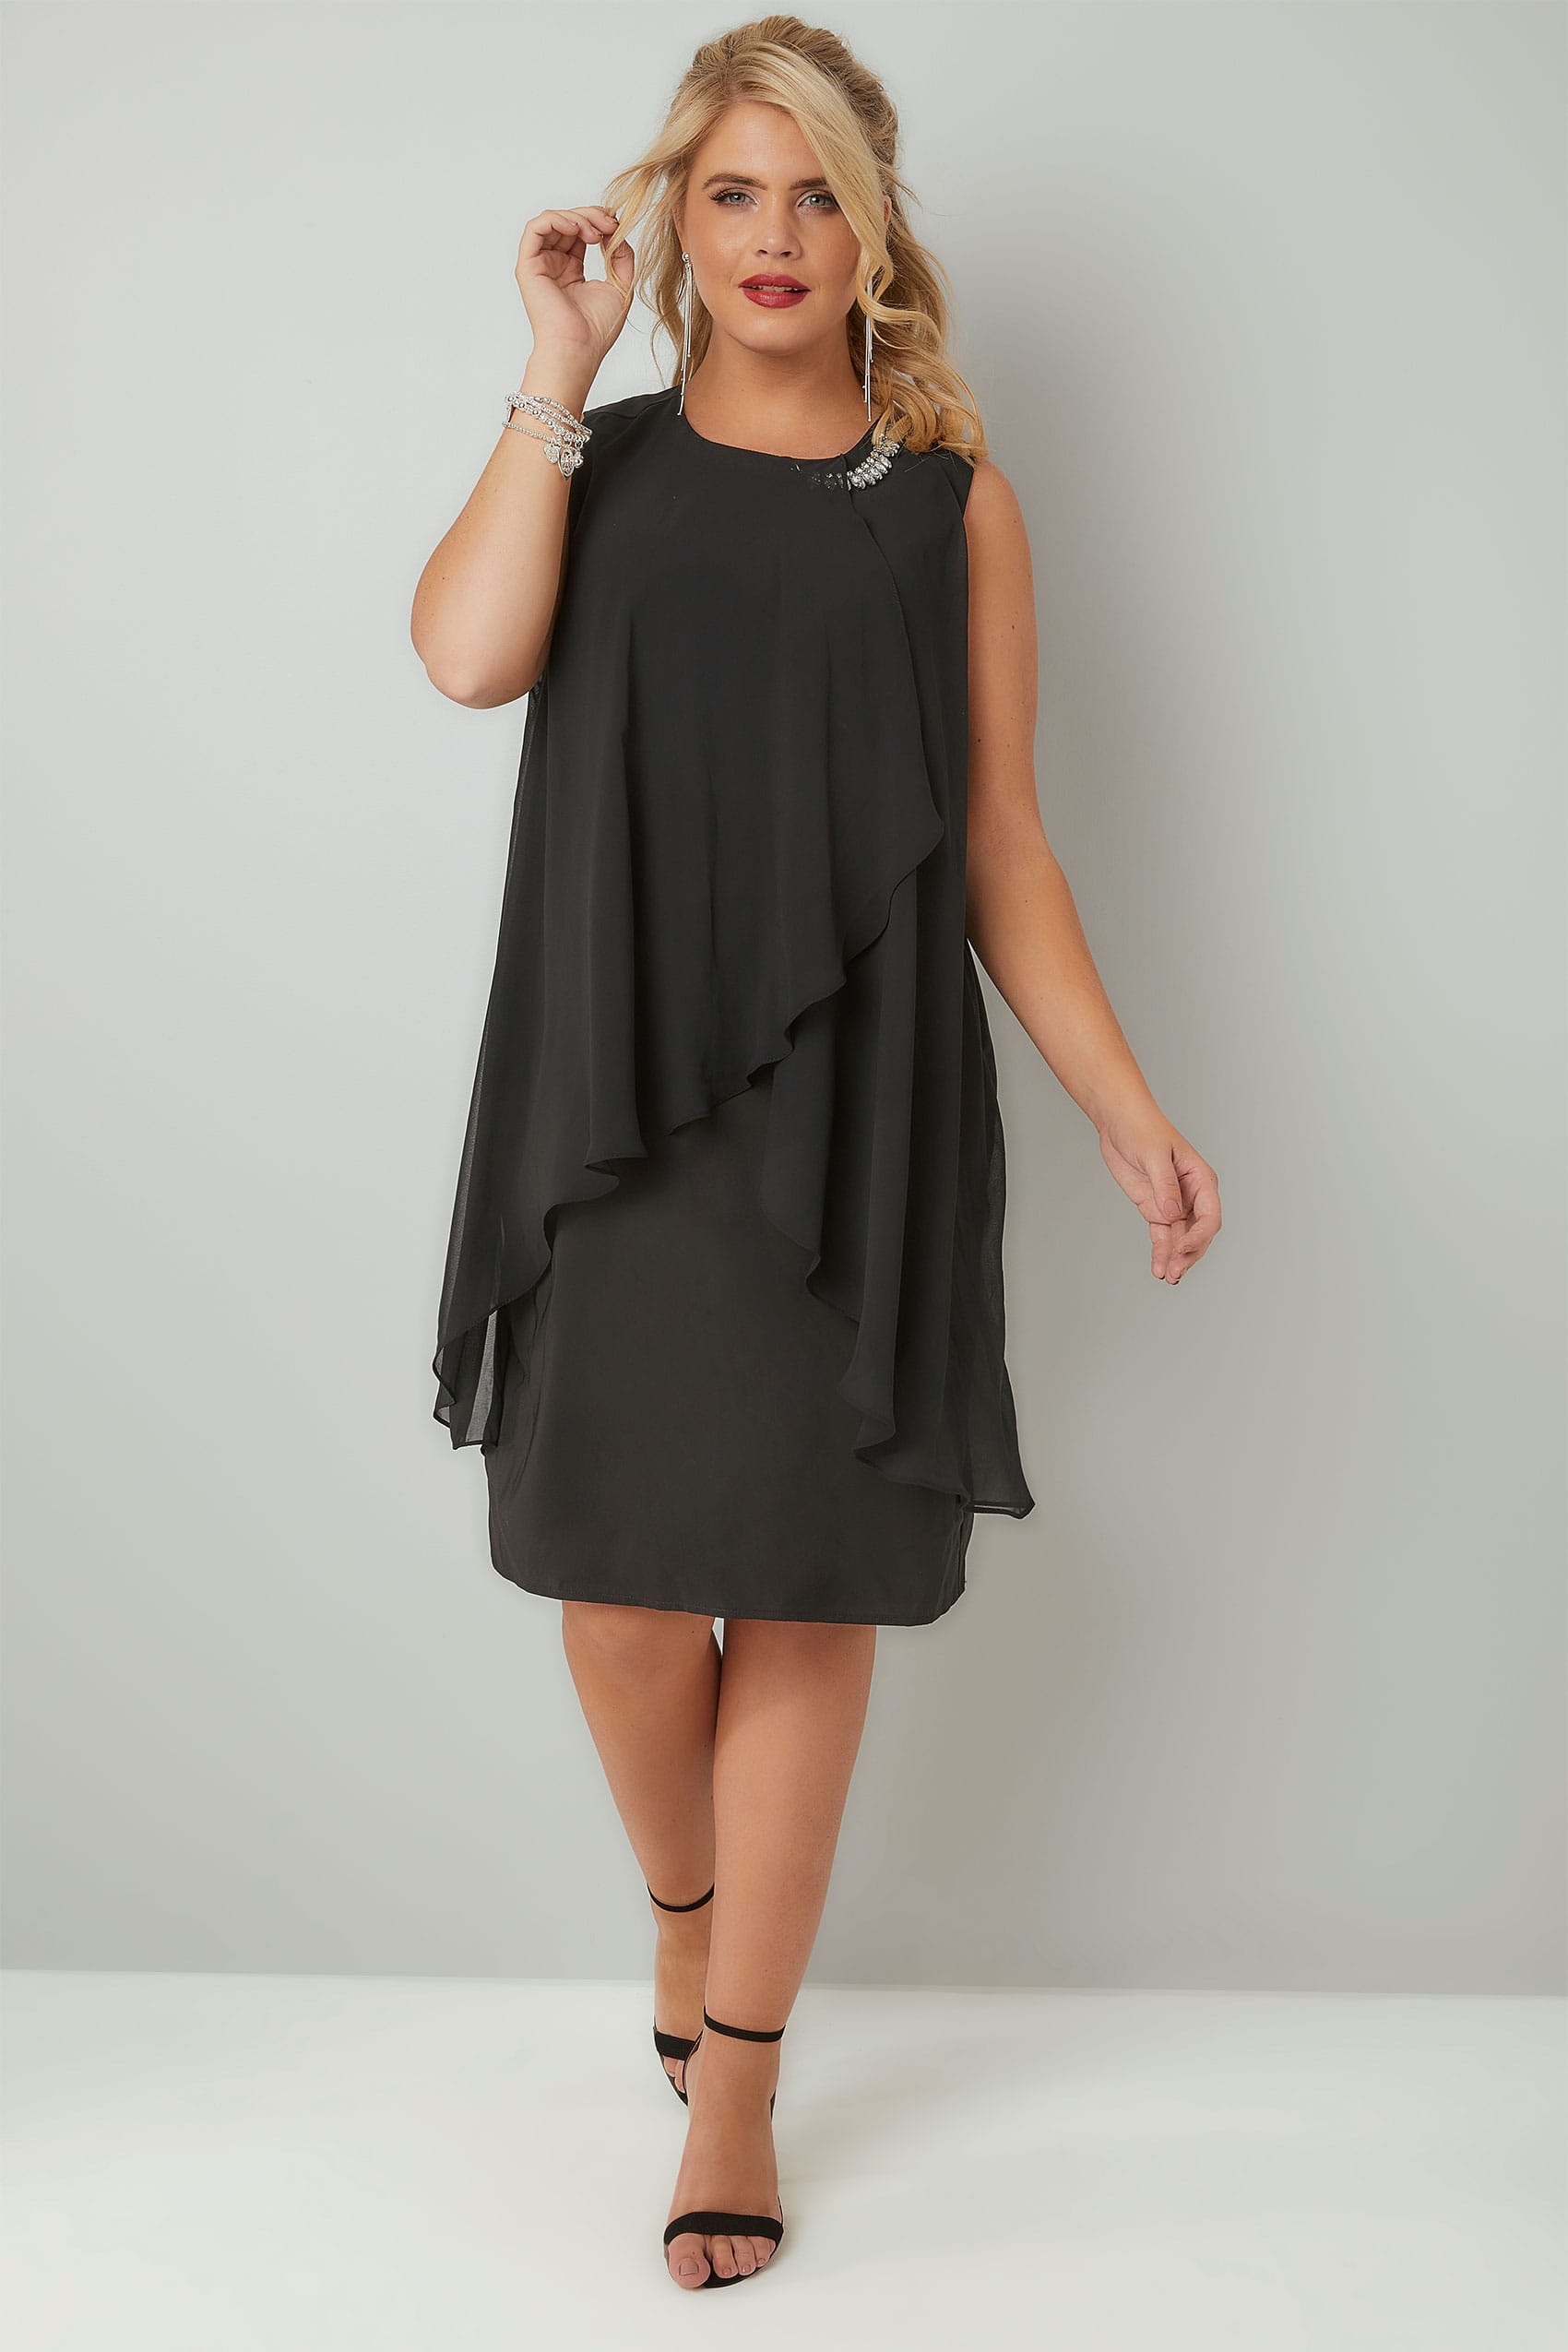 Black Layered Front Dress With Detachable Diamante Trim plus size 16 to 36